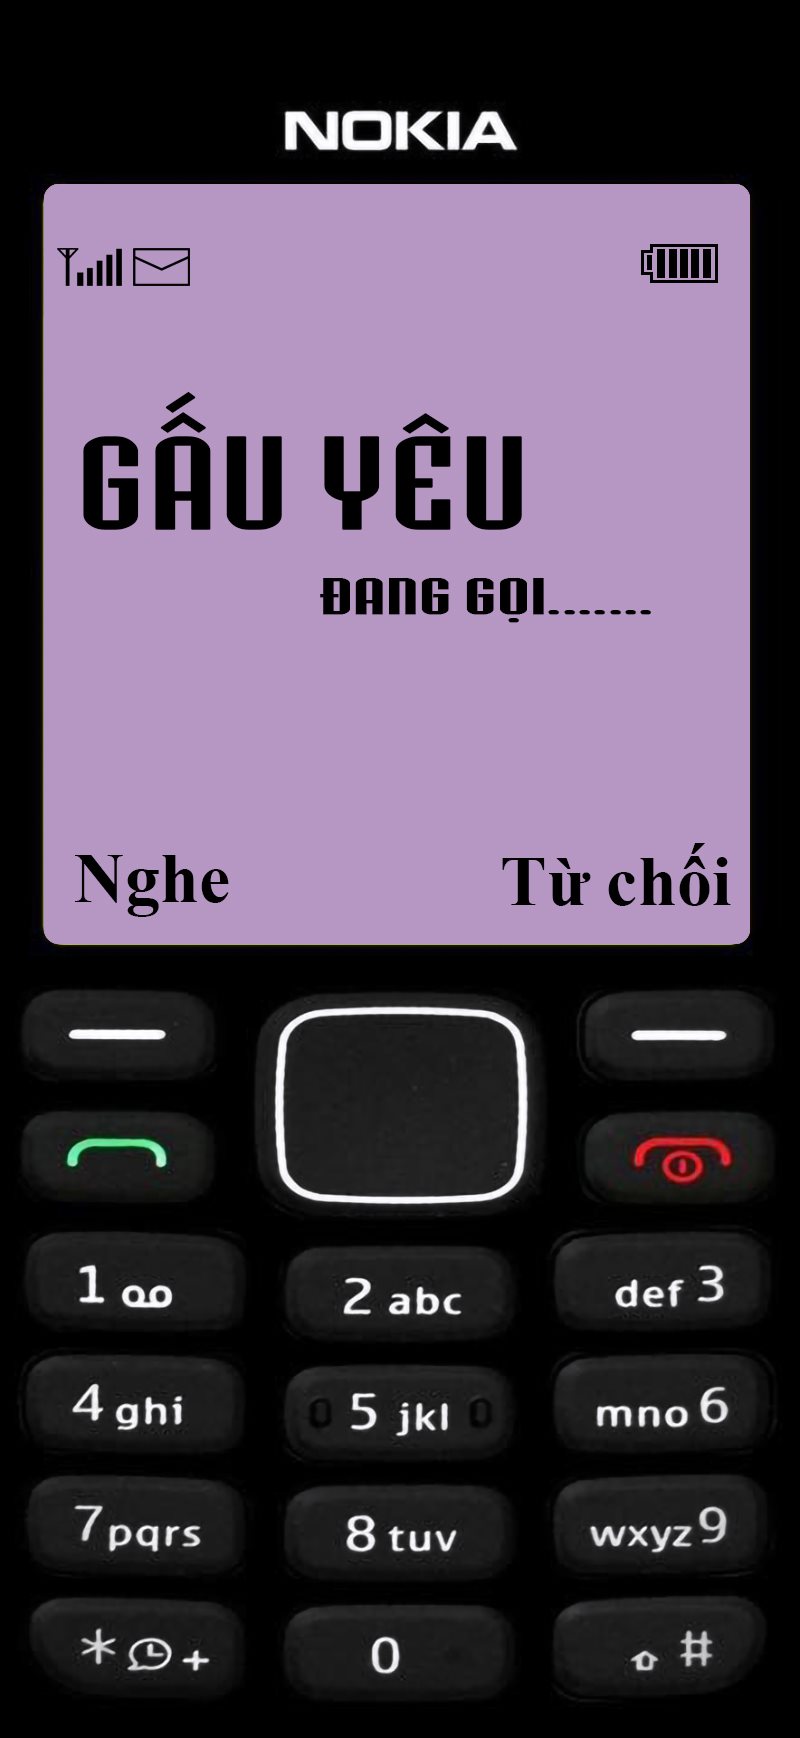 b6-hinh-nen-nokia-1280-cho-samsung-oppo-tren-iphone-anh-nen-nokia-1280-danh-cho-smartphone-dien-thoai-cam-ung.jpg